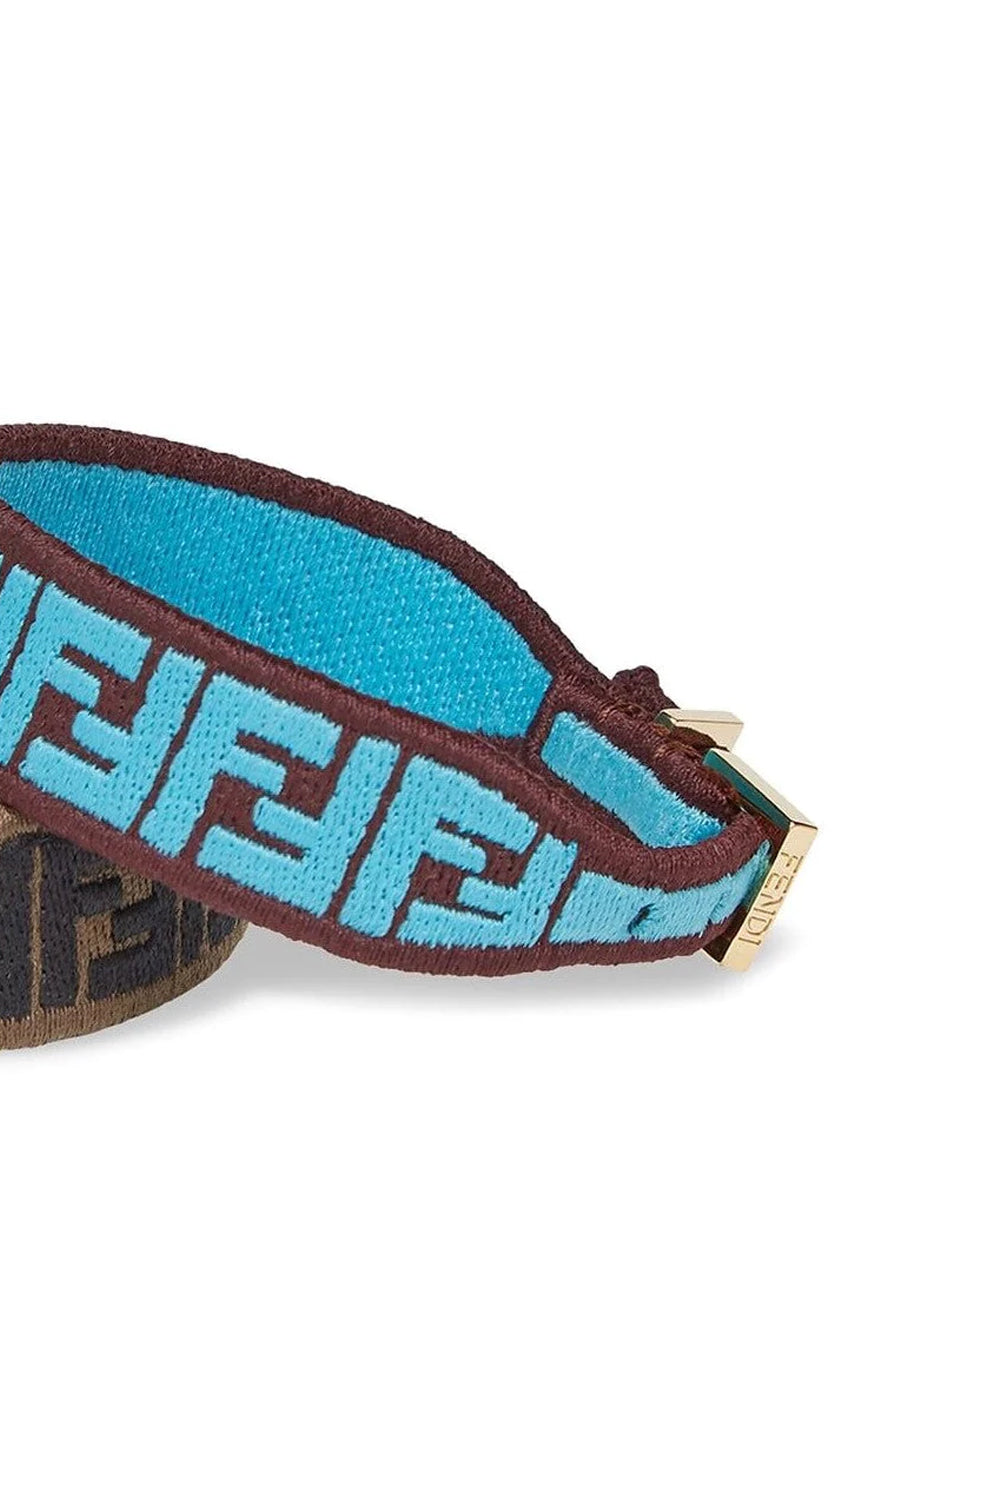 Fendi FF Embroidered Brown Cyber Blue Kit Bracelet